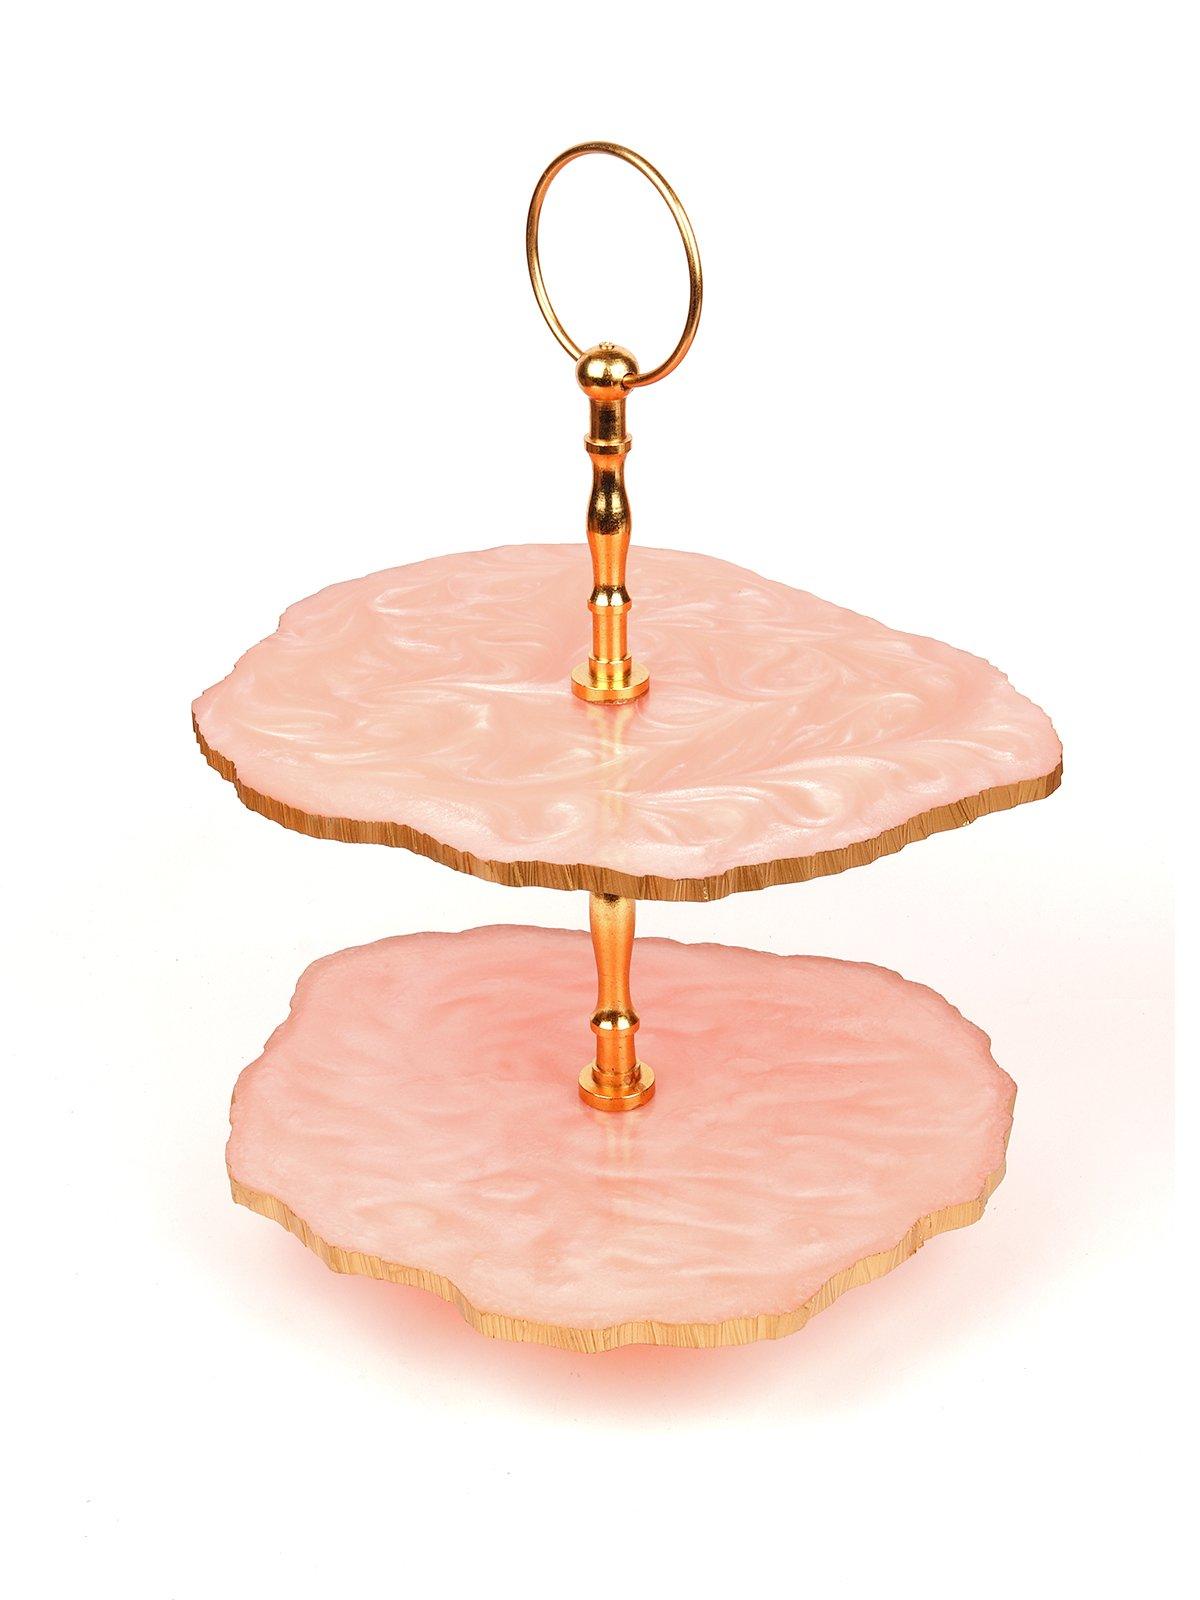 

Magnificent Pink & Golden TwoTier Marble Dessert Stand